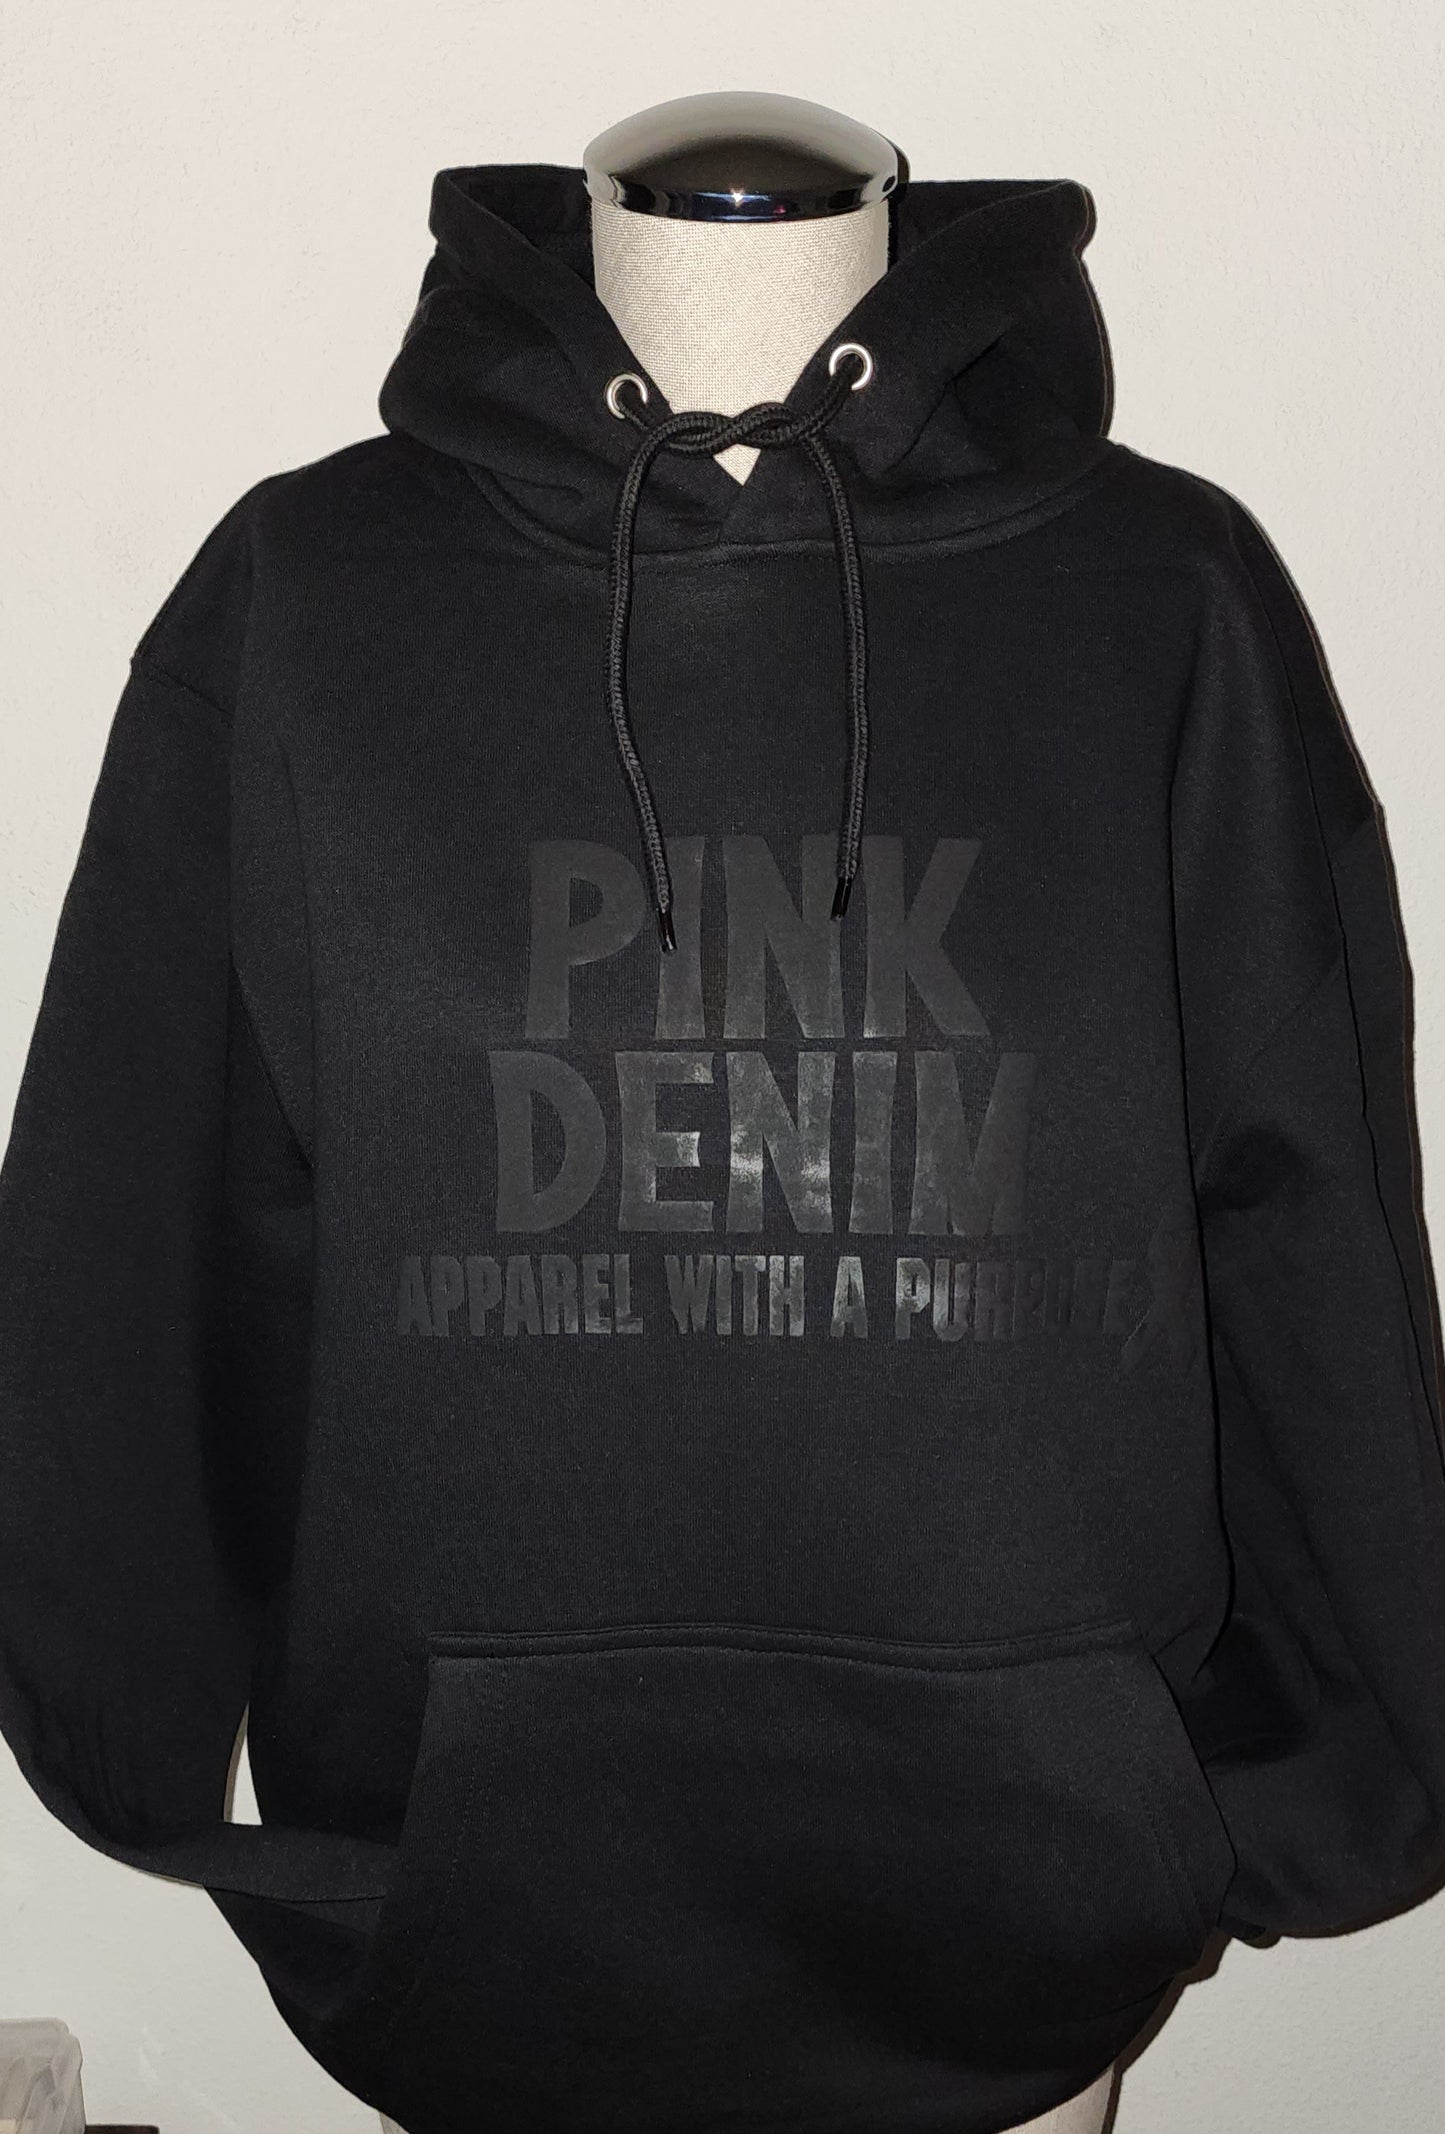 PINK DENIM 3D Puff Design UNISEX Premium Hooded Sweatshirt